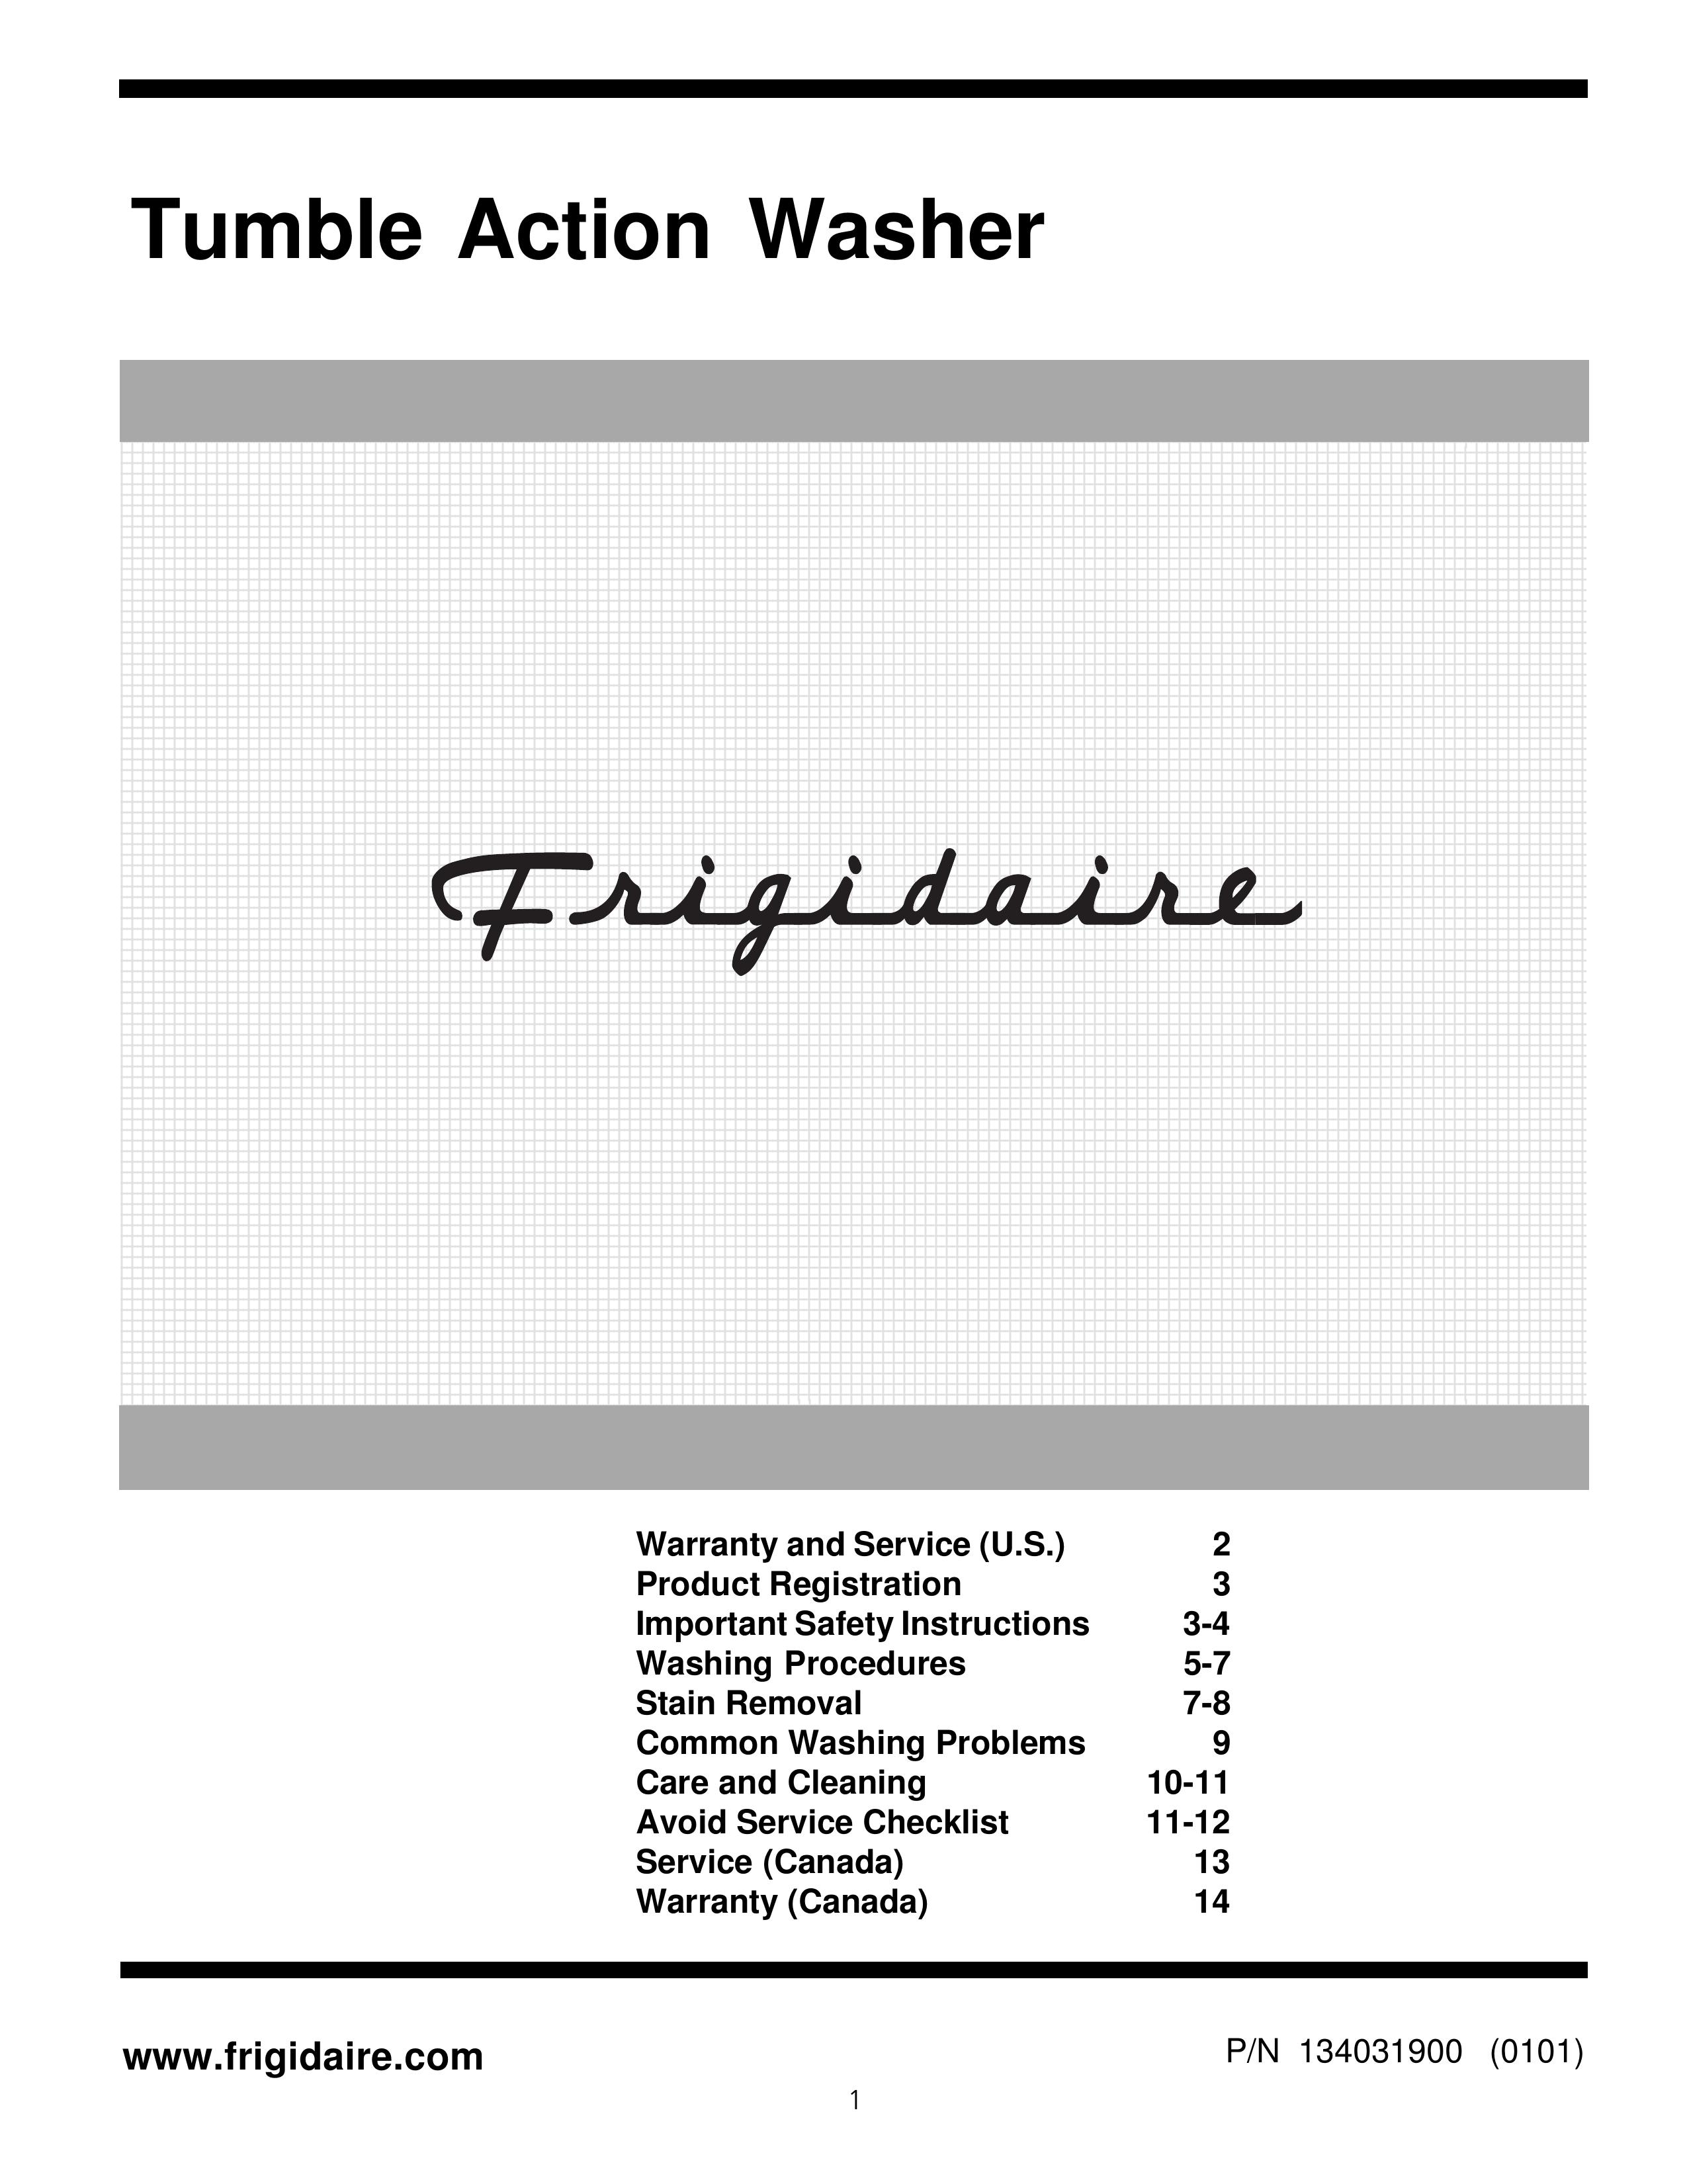 Frigidaire Tumble Action Washers Pressure Washer User Manual